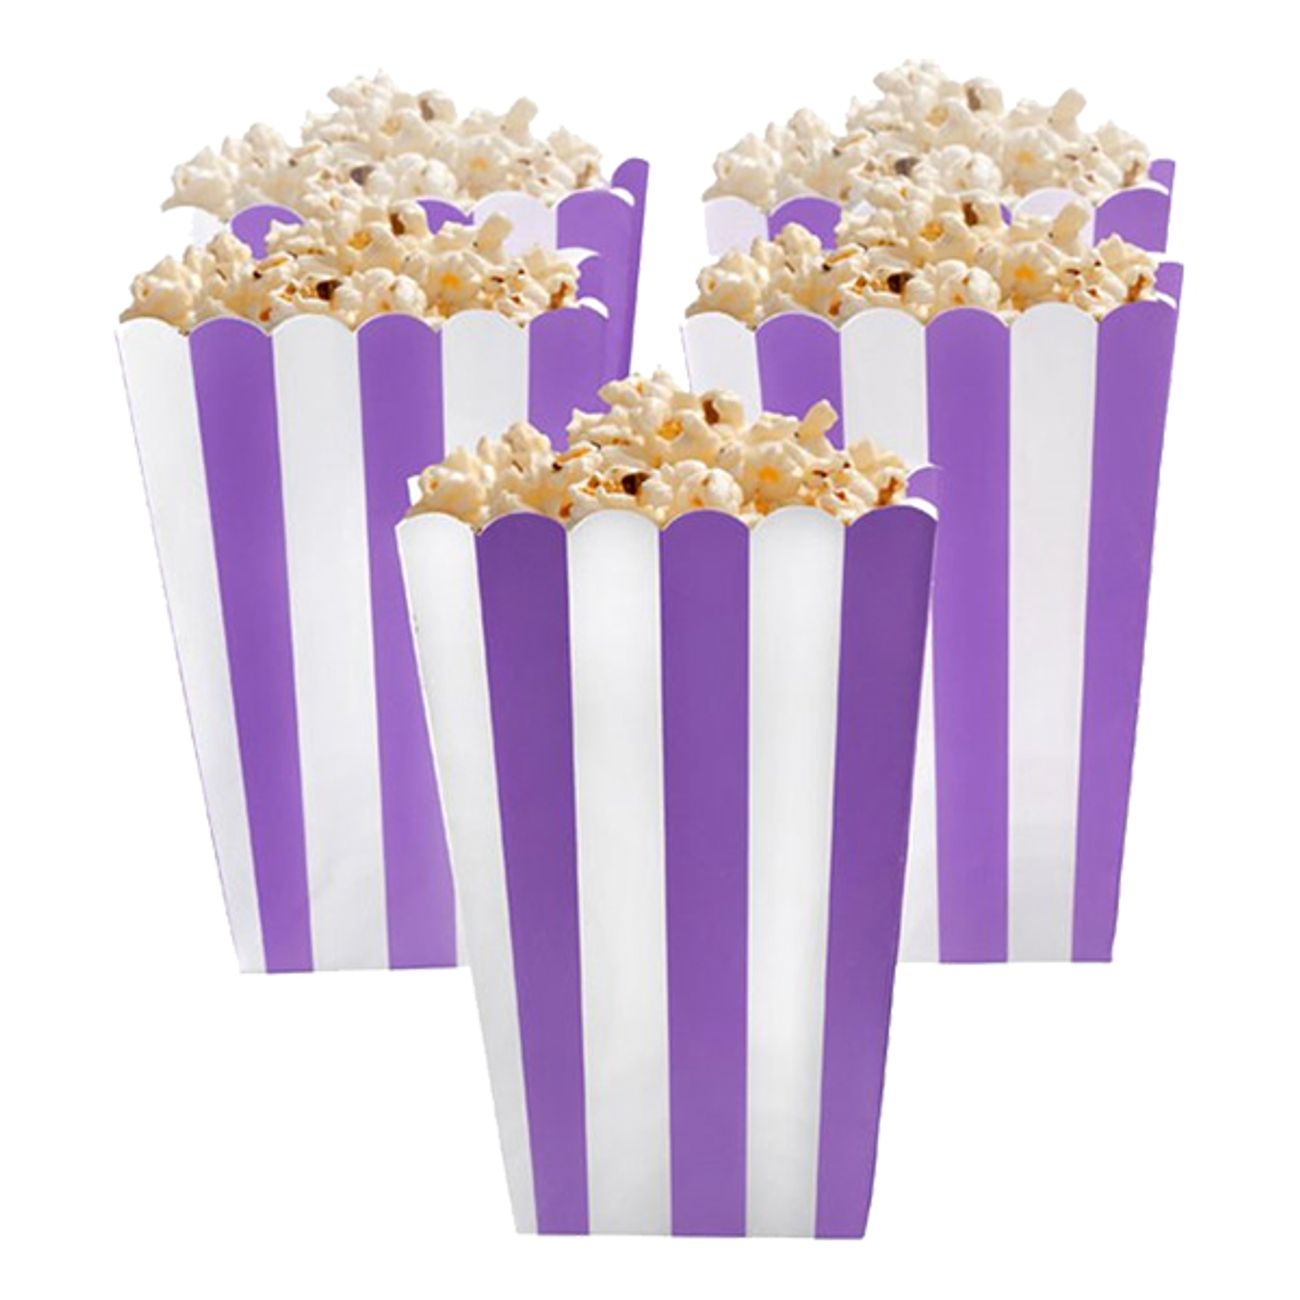 popcornbagare-lila-randiga-1